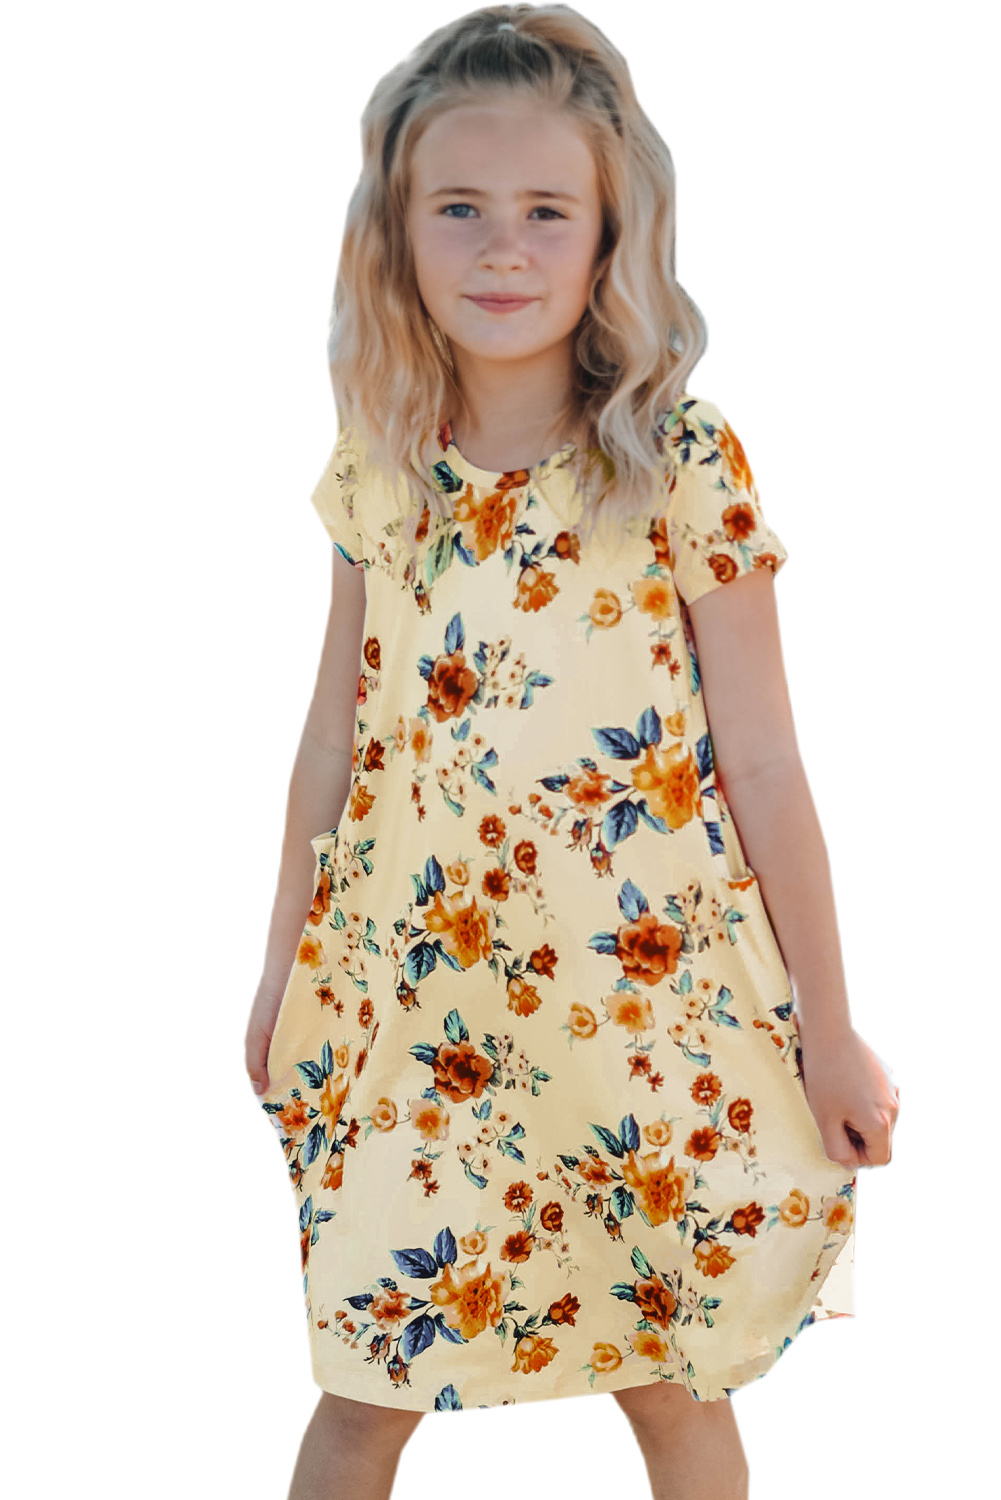 Children's Floral Dresses